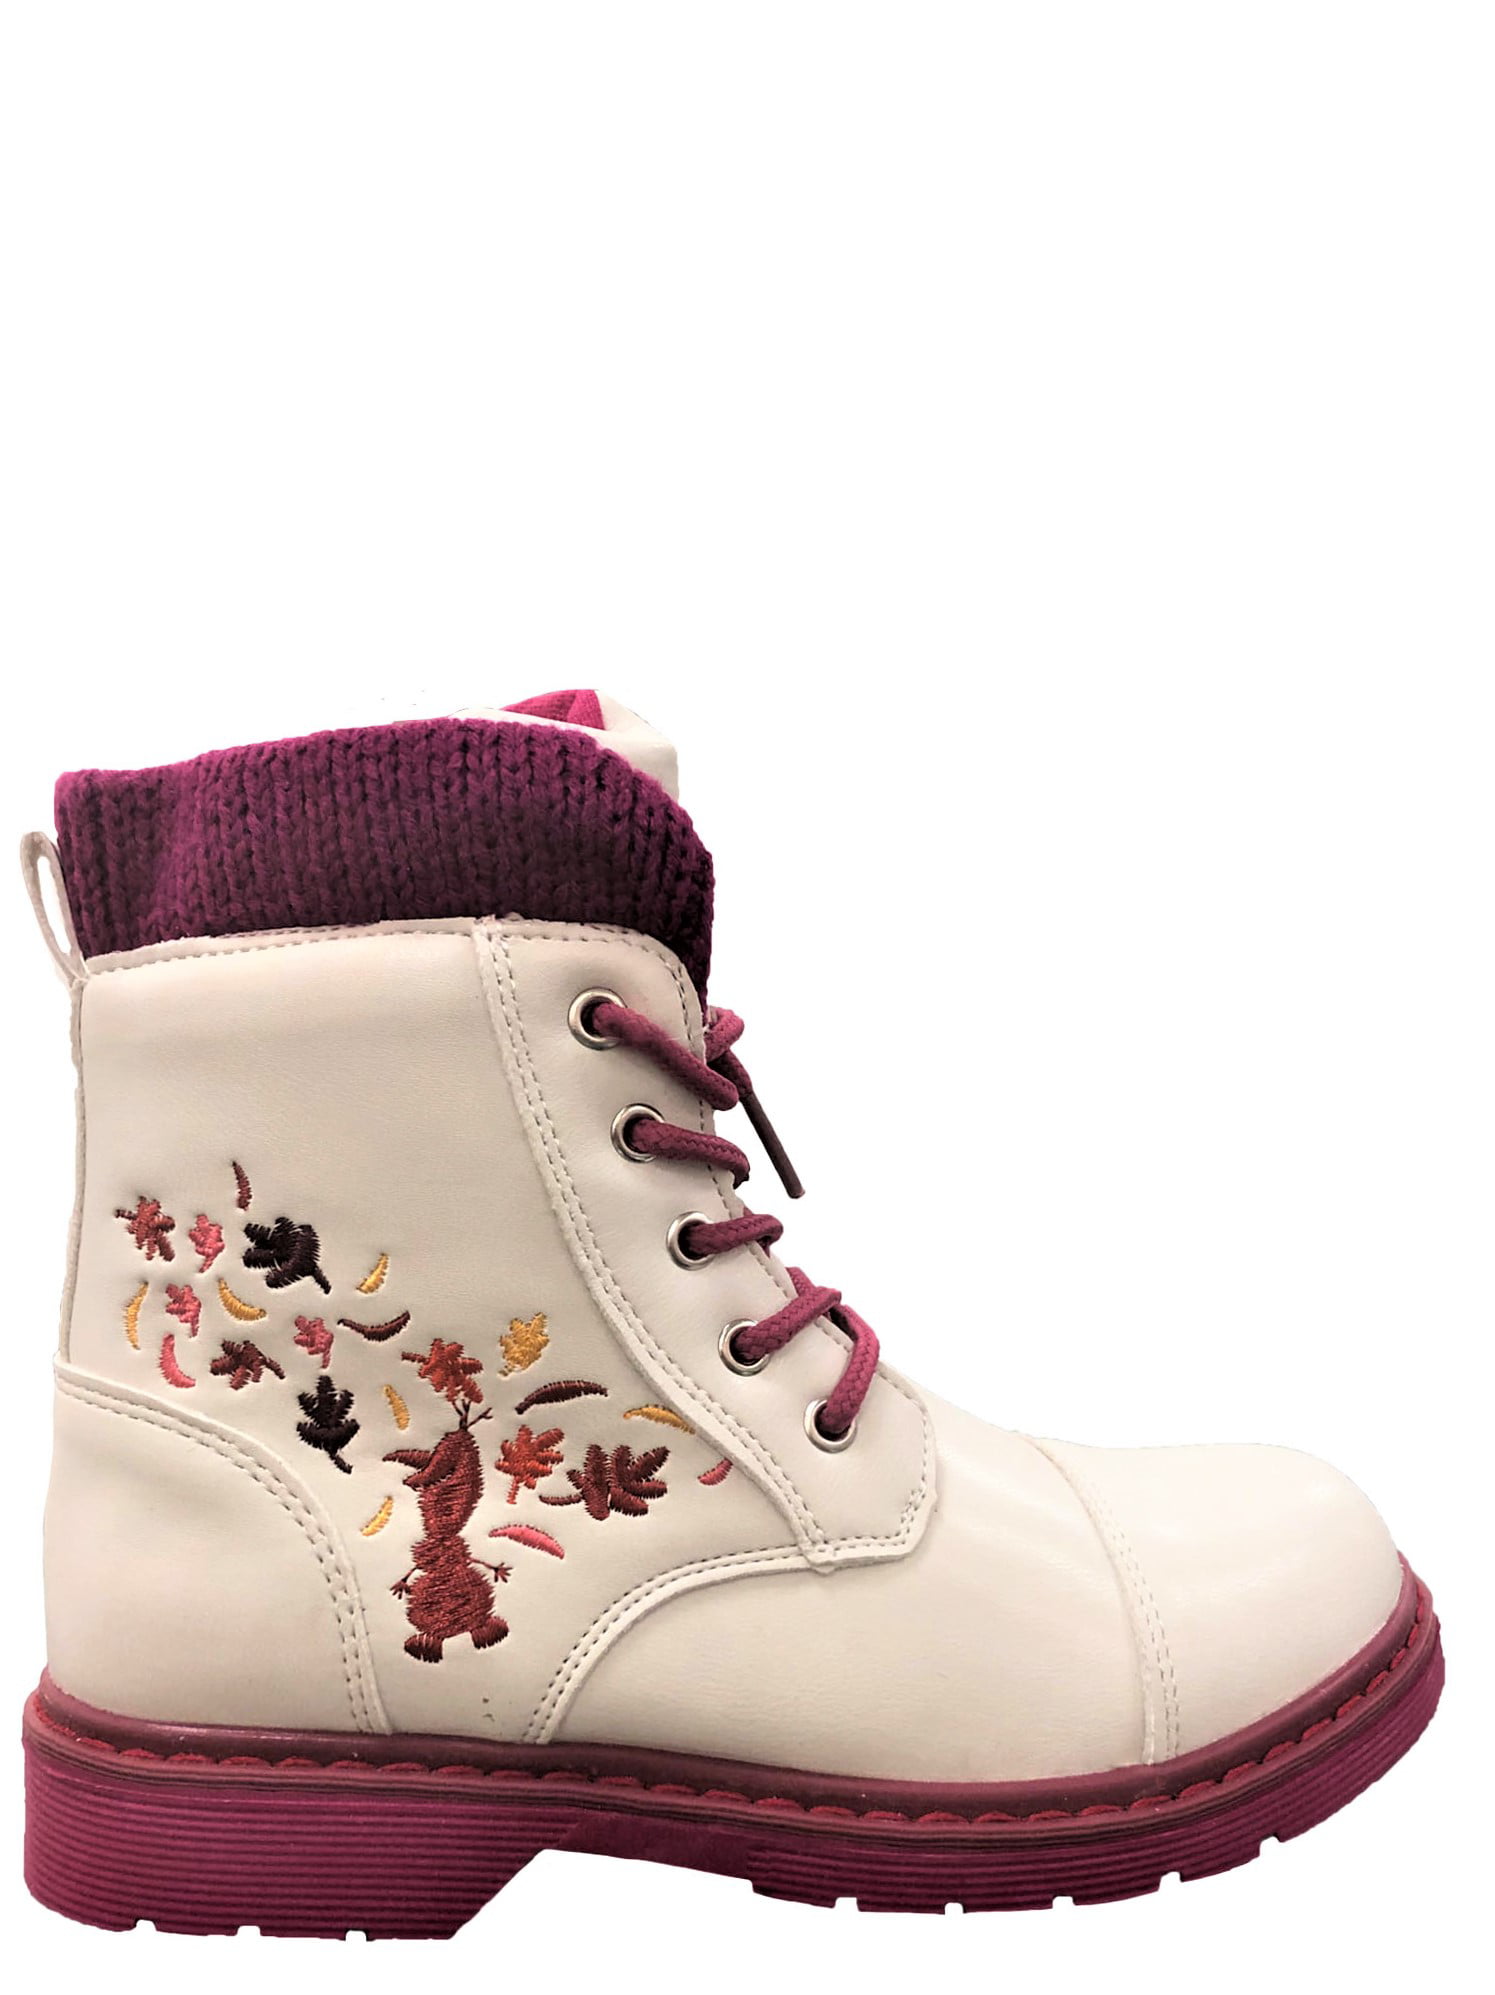 disney girl boots